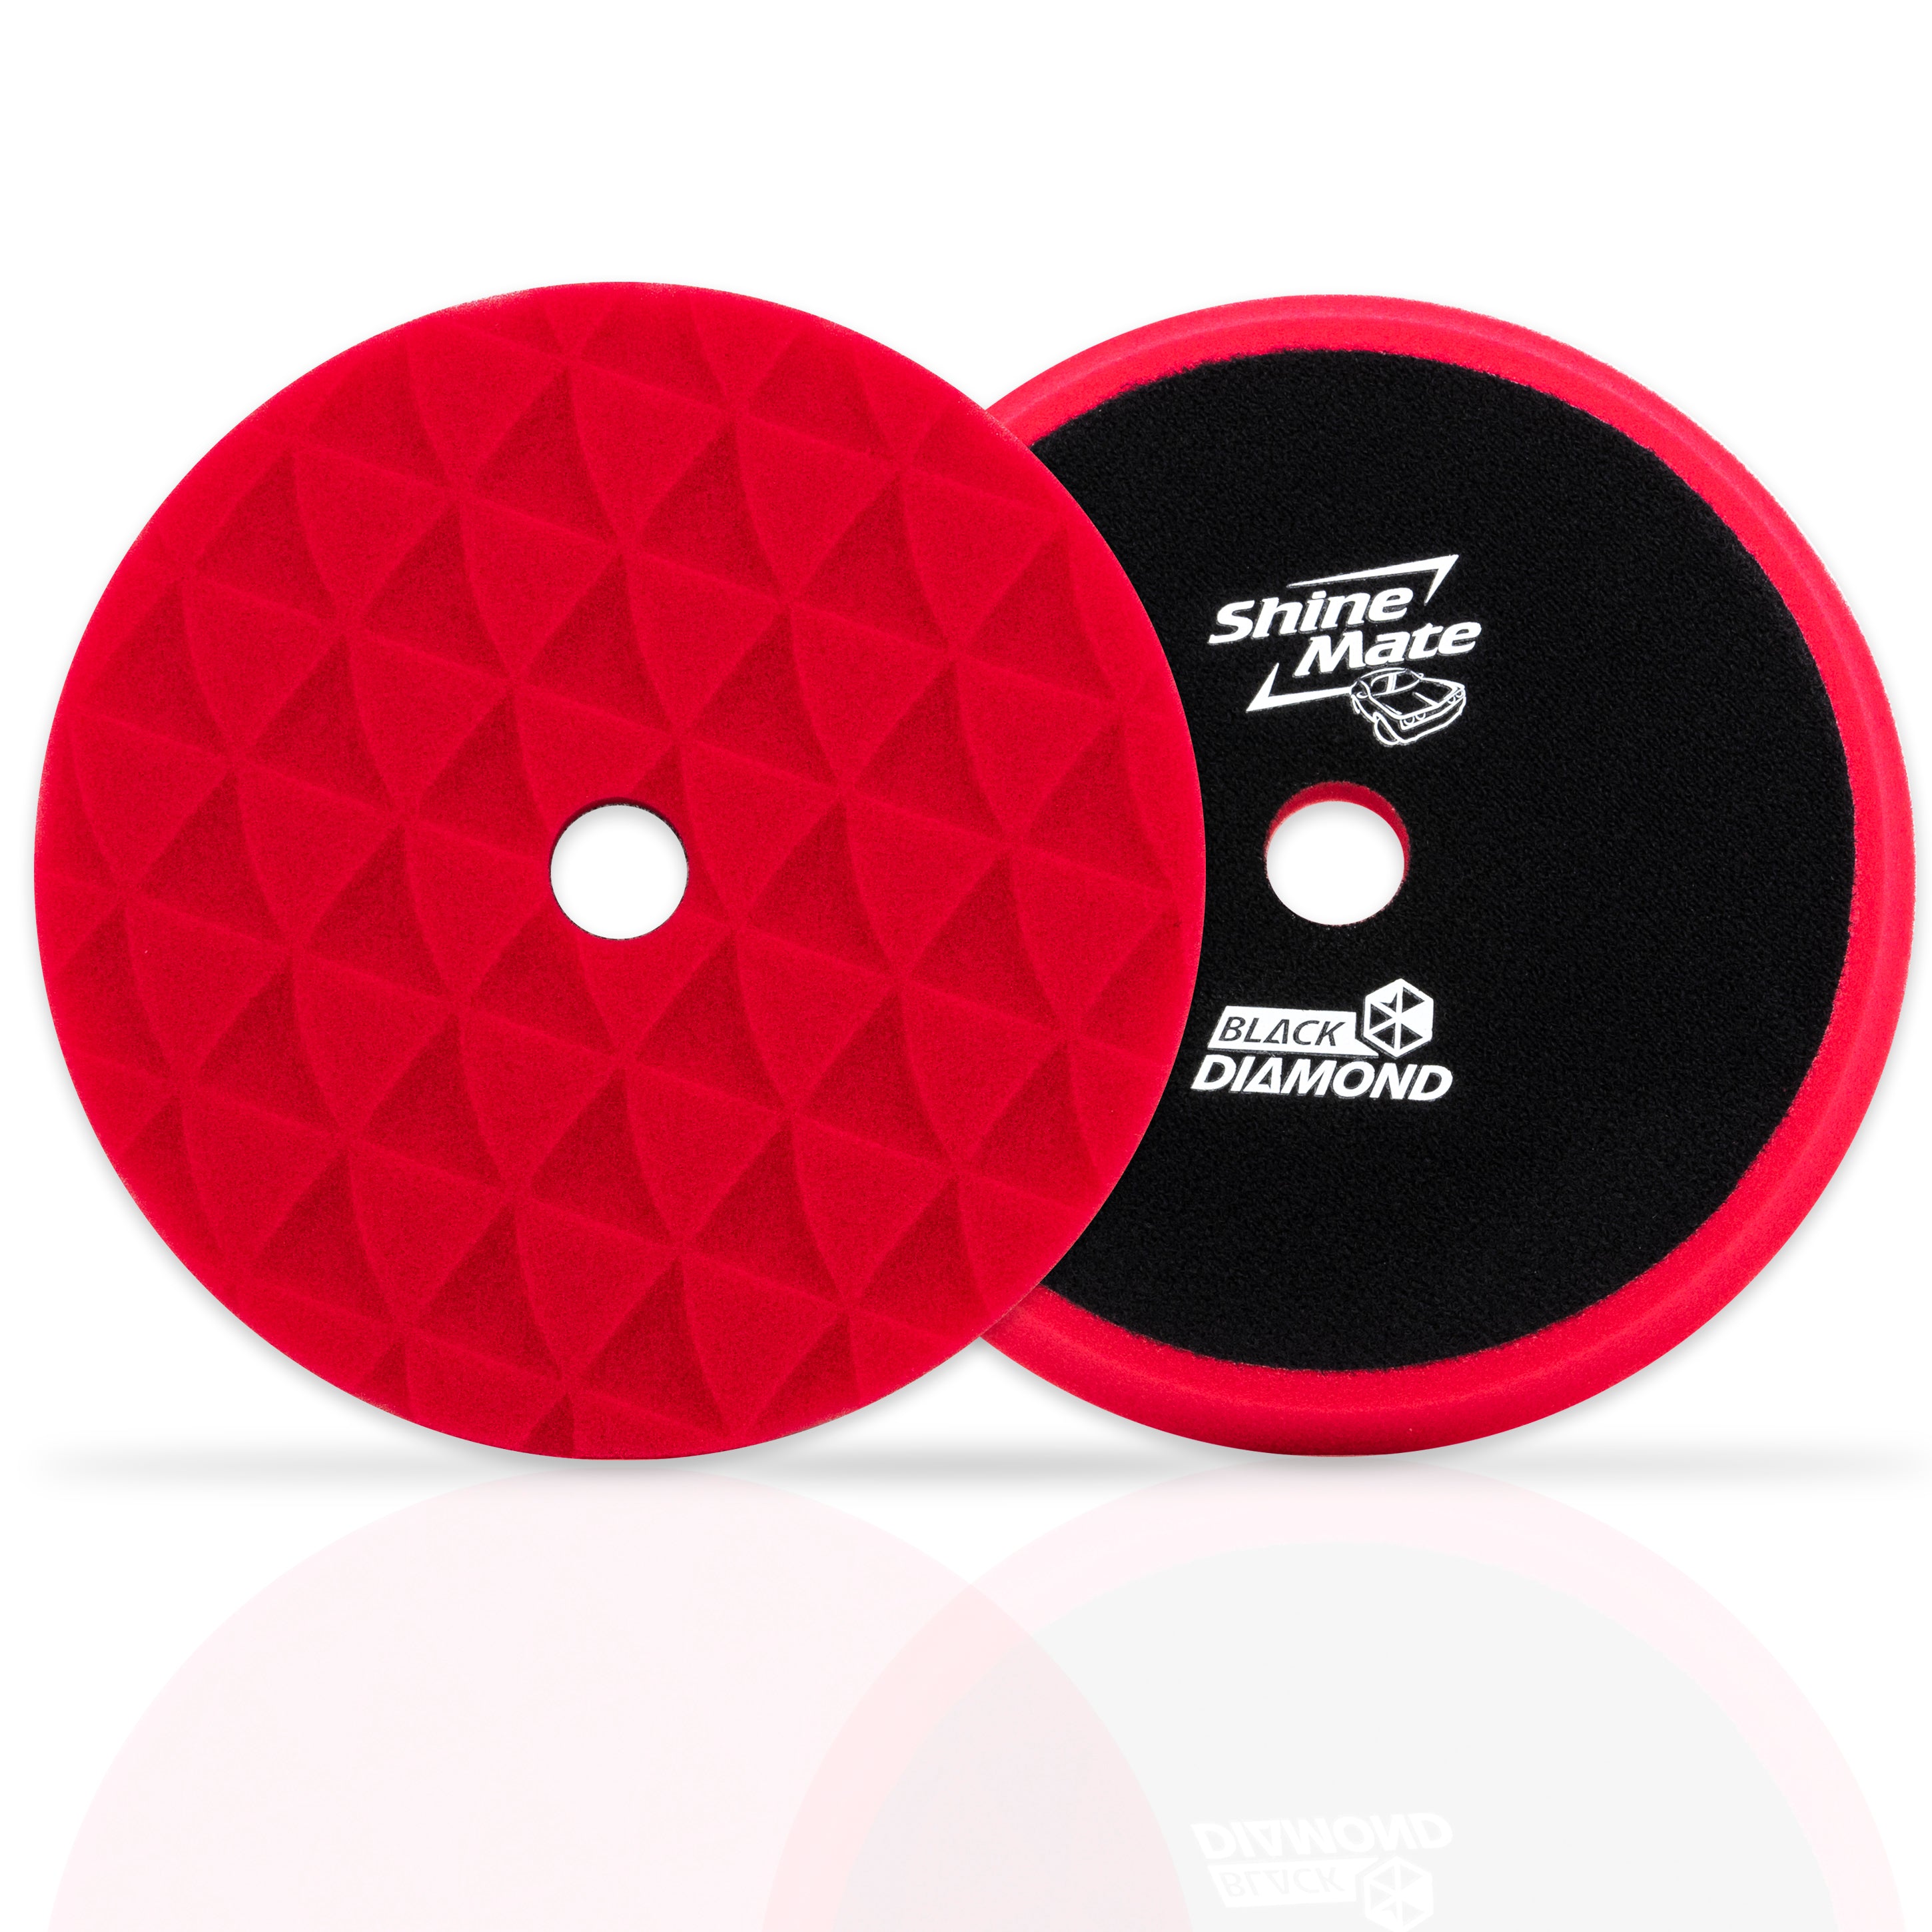 Shinemate - 7" Black Diamond Red Finishing Foam Pad to fit 6" Backing Plates (5 Pack) - Tool Guy Republic